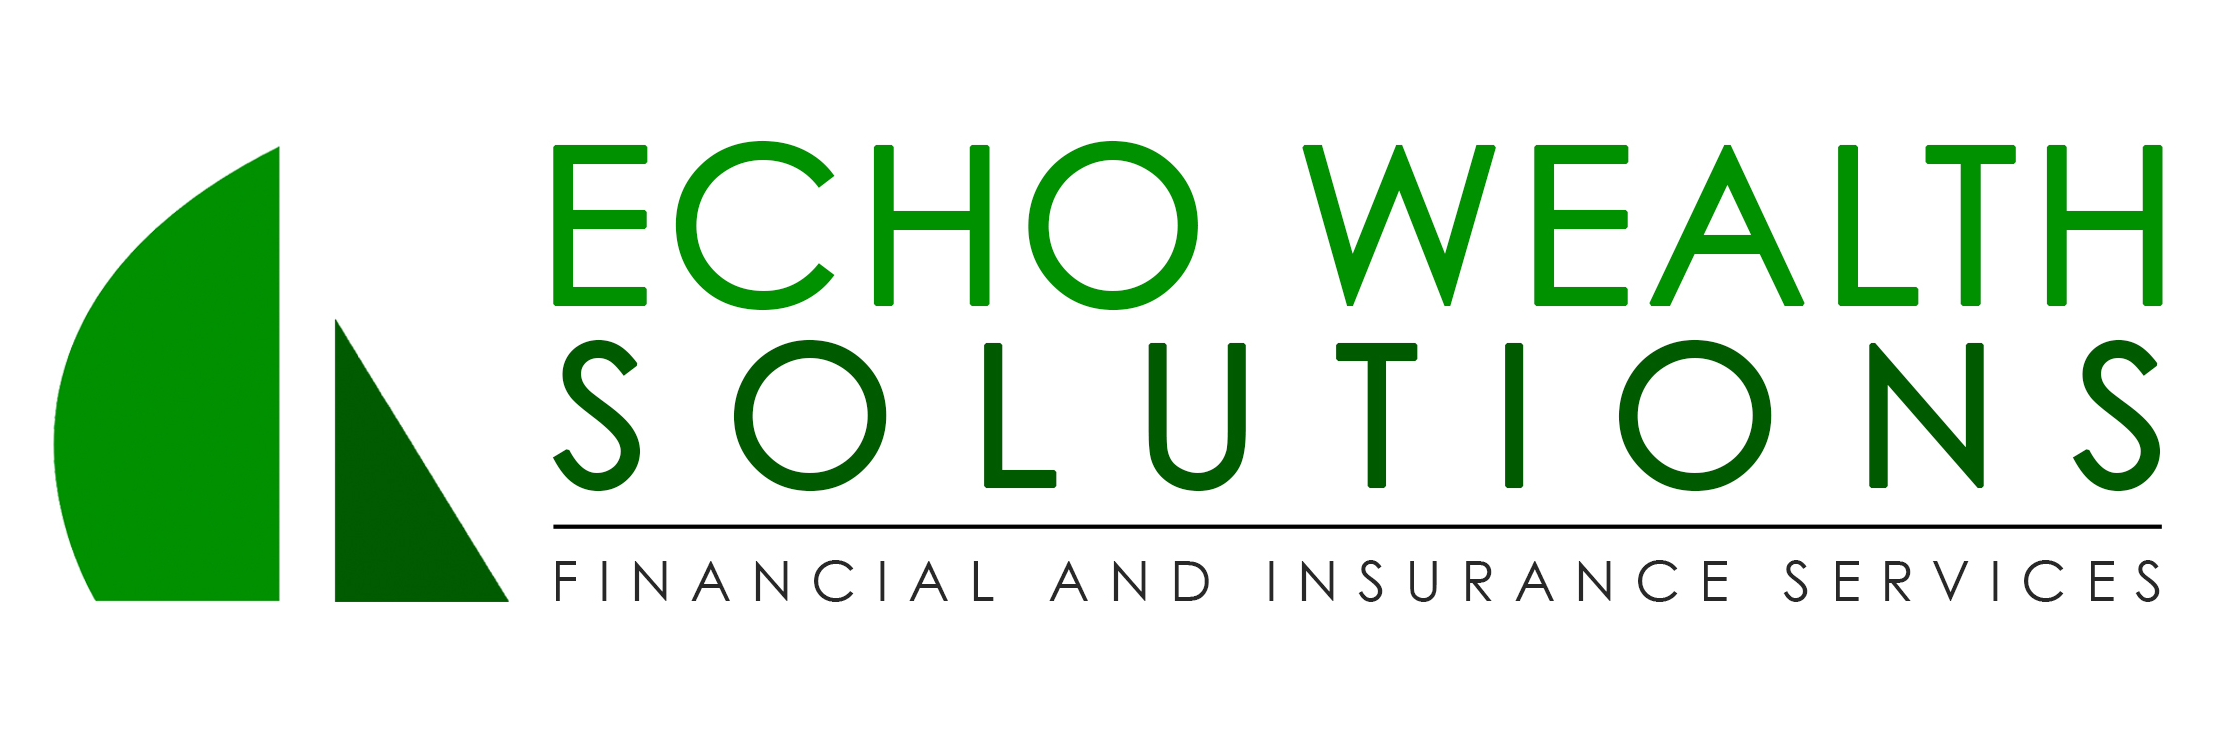 Echo Wealth Solutions logo